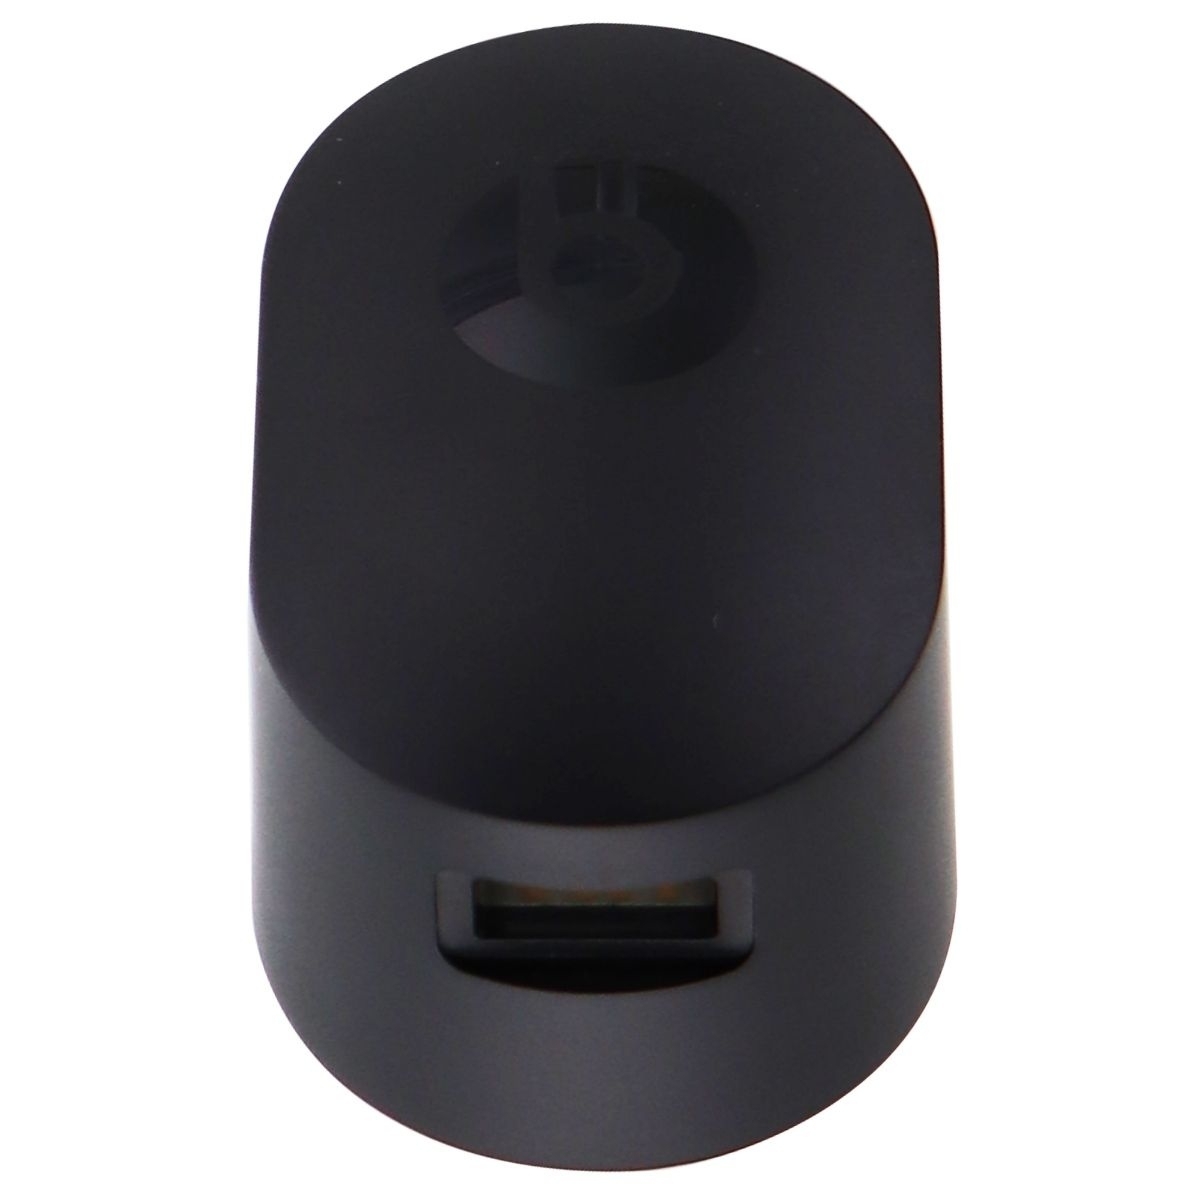 Beats 5.2V / 2.4A Single USB Power Adapter (A1727) - Black (Refurbished)